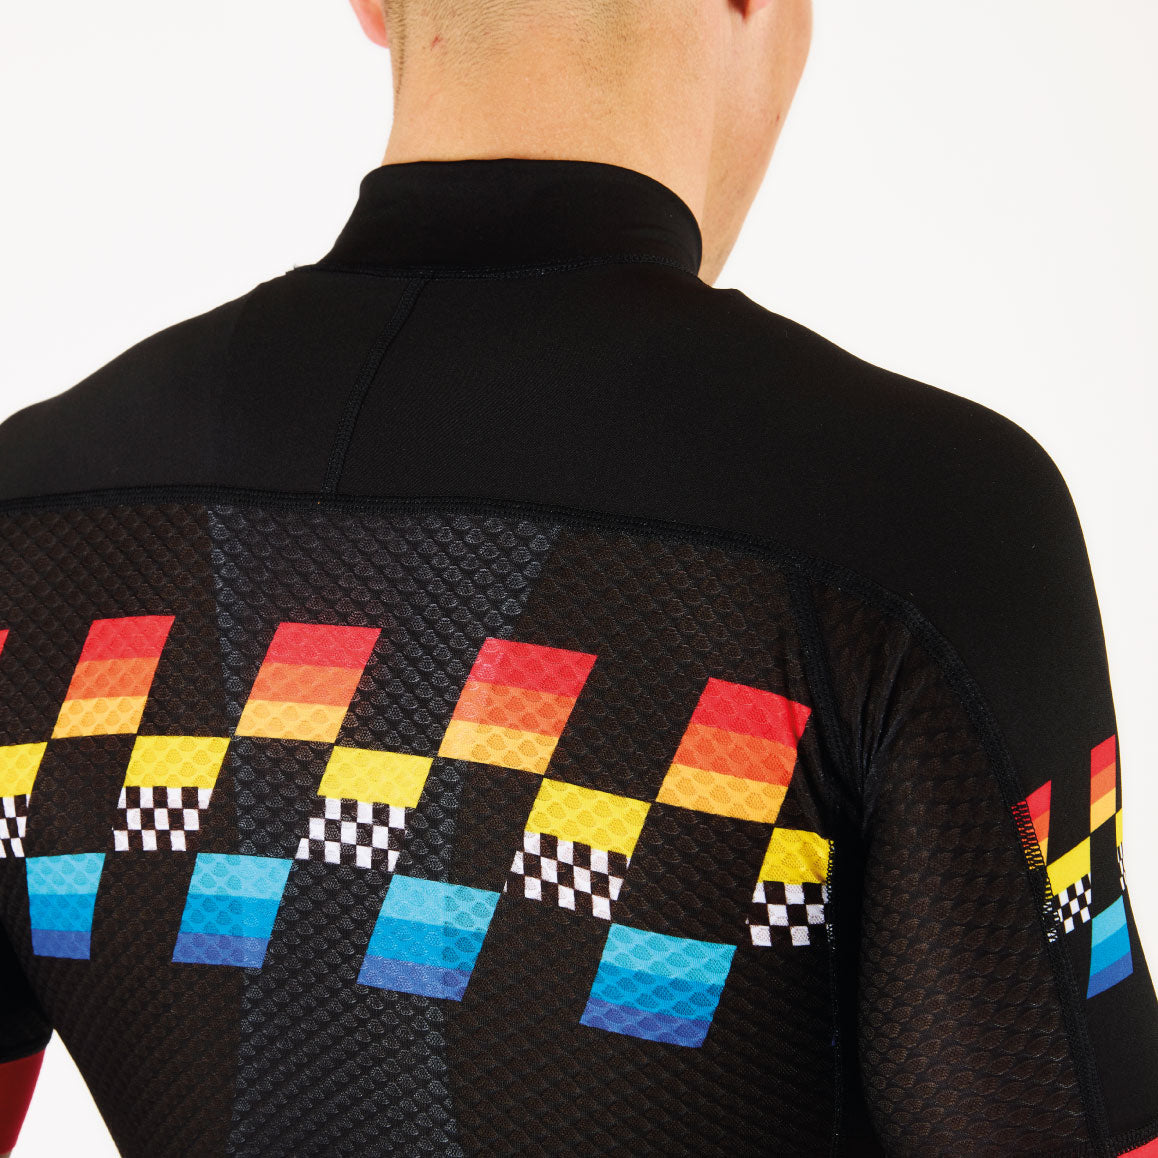 Maillot vélo homme couleur finisher black repsirant poches dorsales tissu mesh - fabrication française kiwami sports 